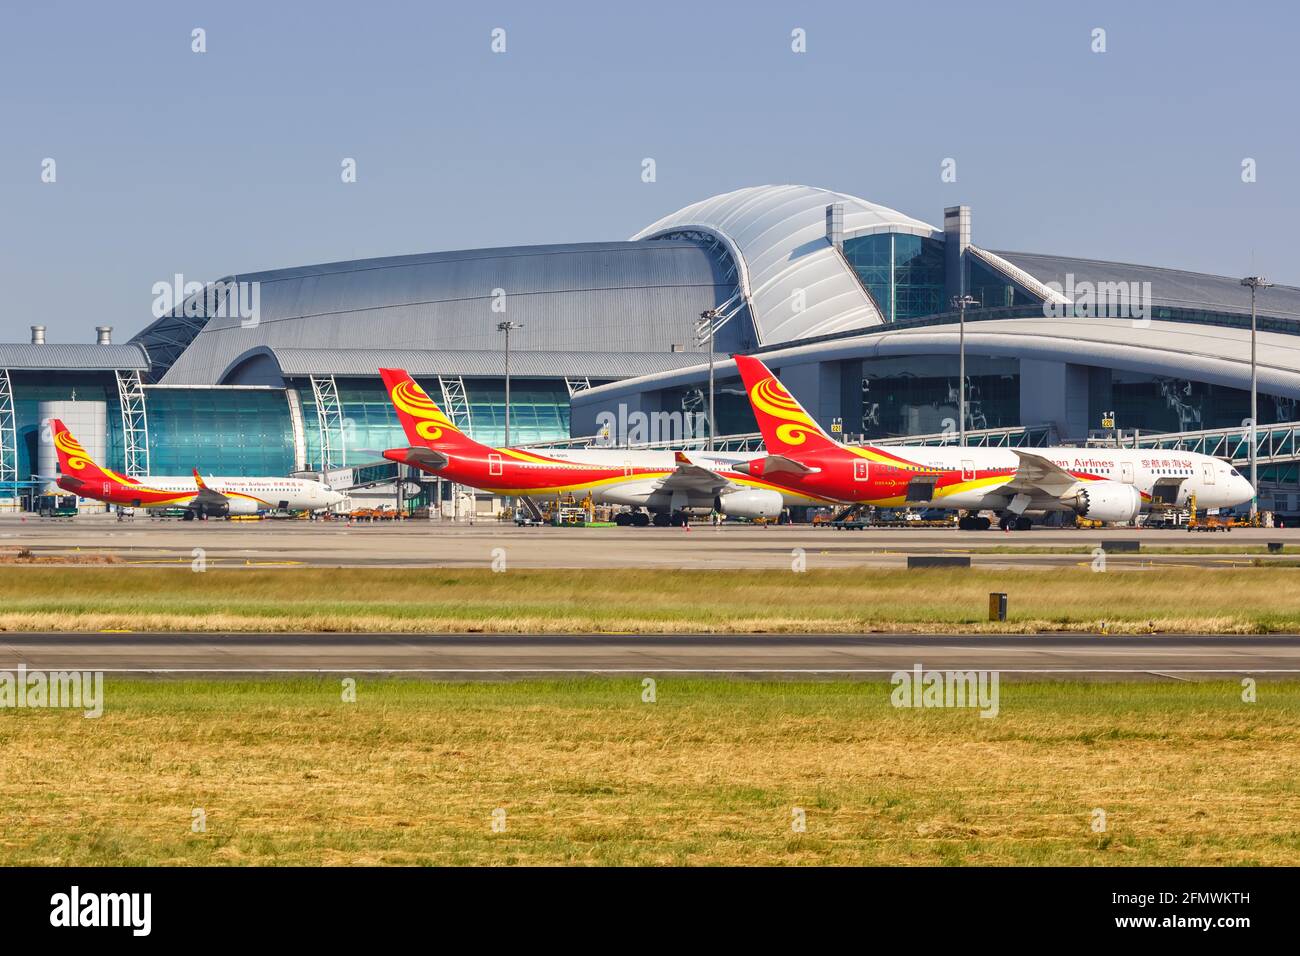 Guangzhou, China - 23. September 2019: Flugzeuge von Hainan Airlines am Flughafen Guangzhou Baiyun (CAN) in China. Stockfoto